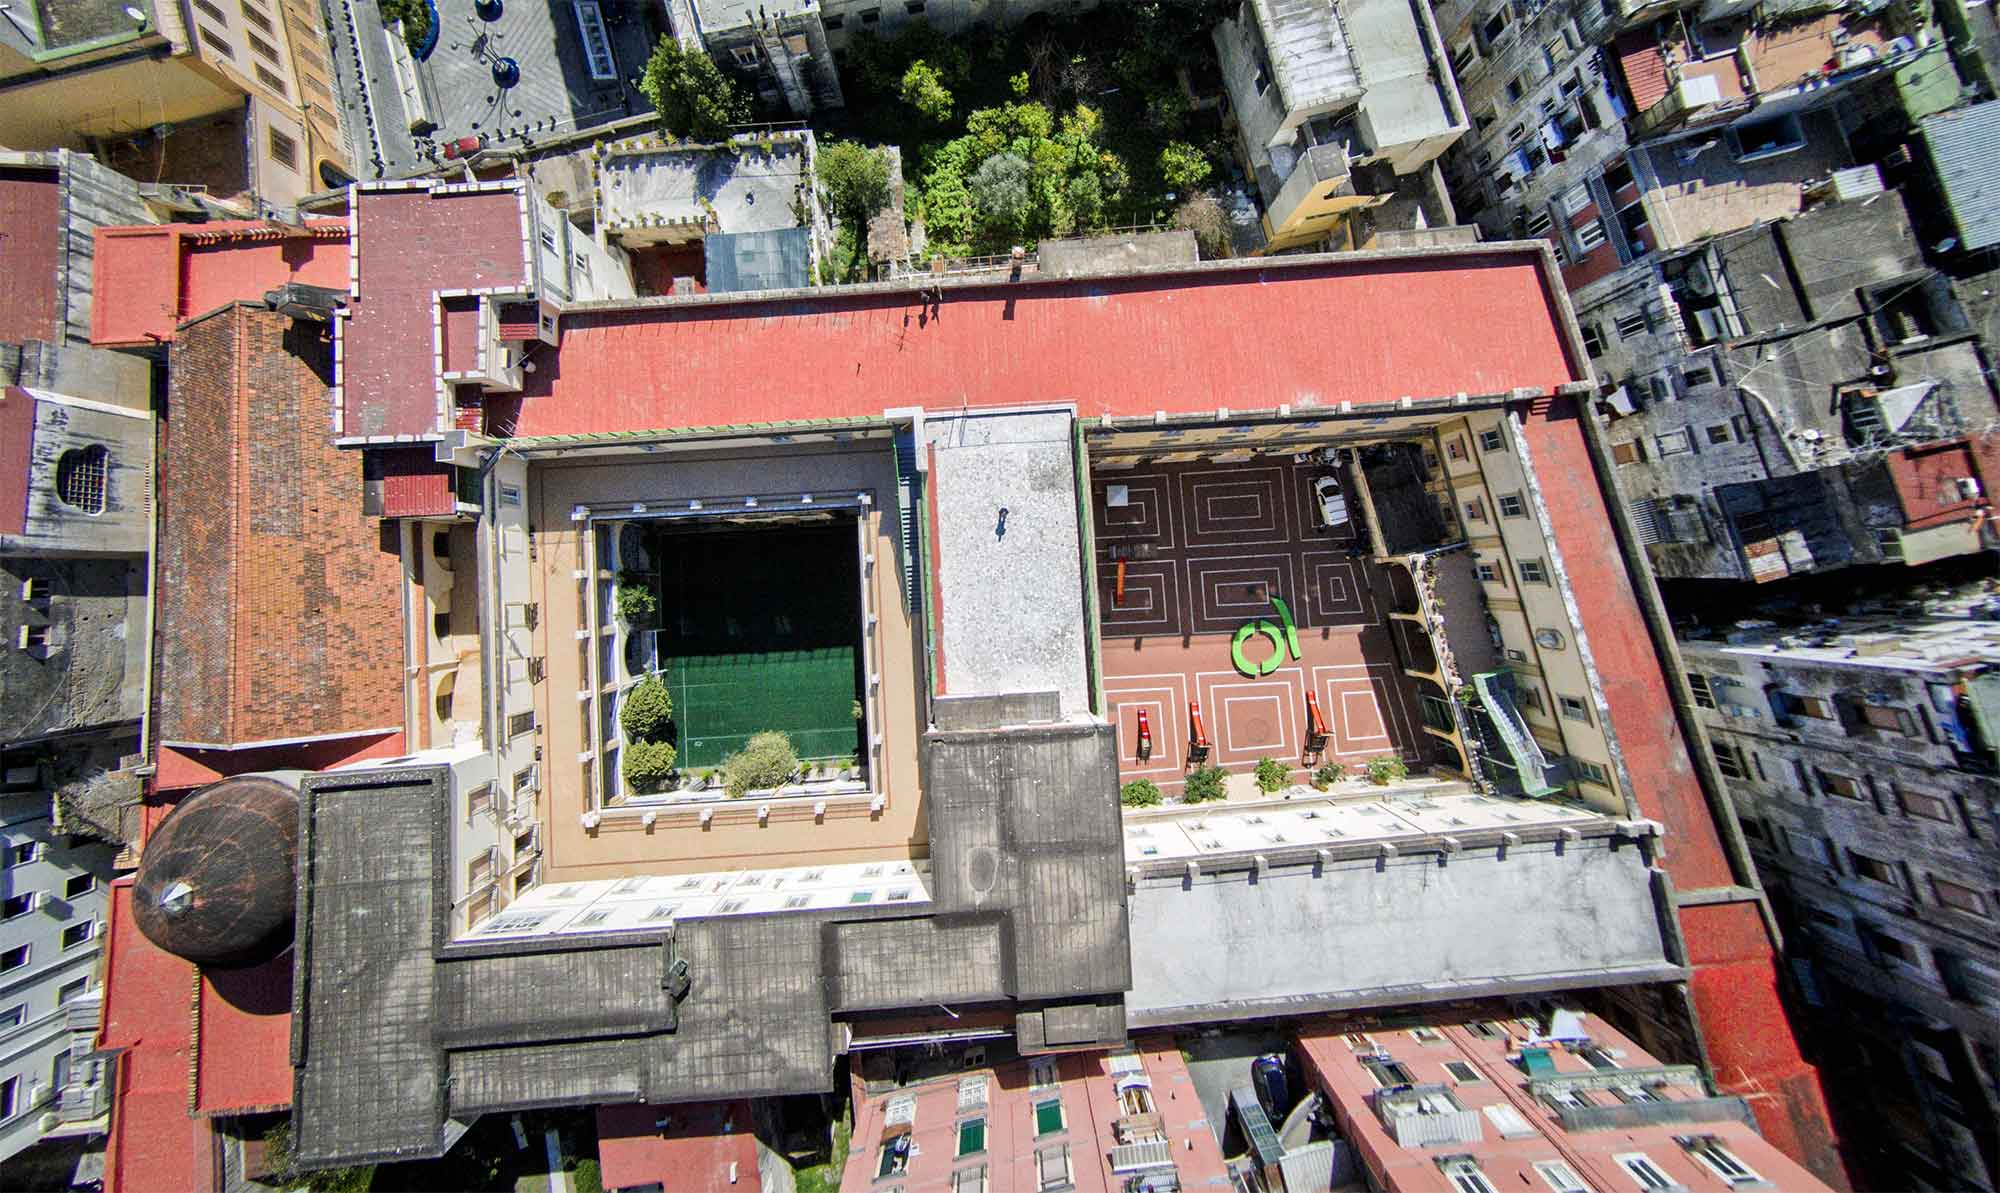 Fondazione Quartieri spagnoli, Napoli. Photo Kontrolab